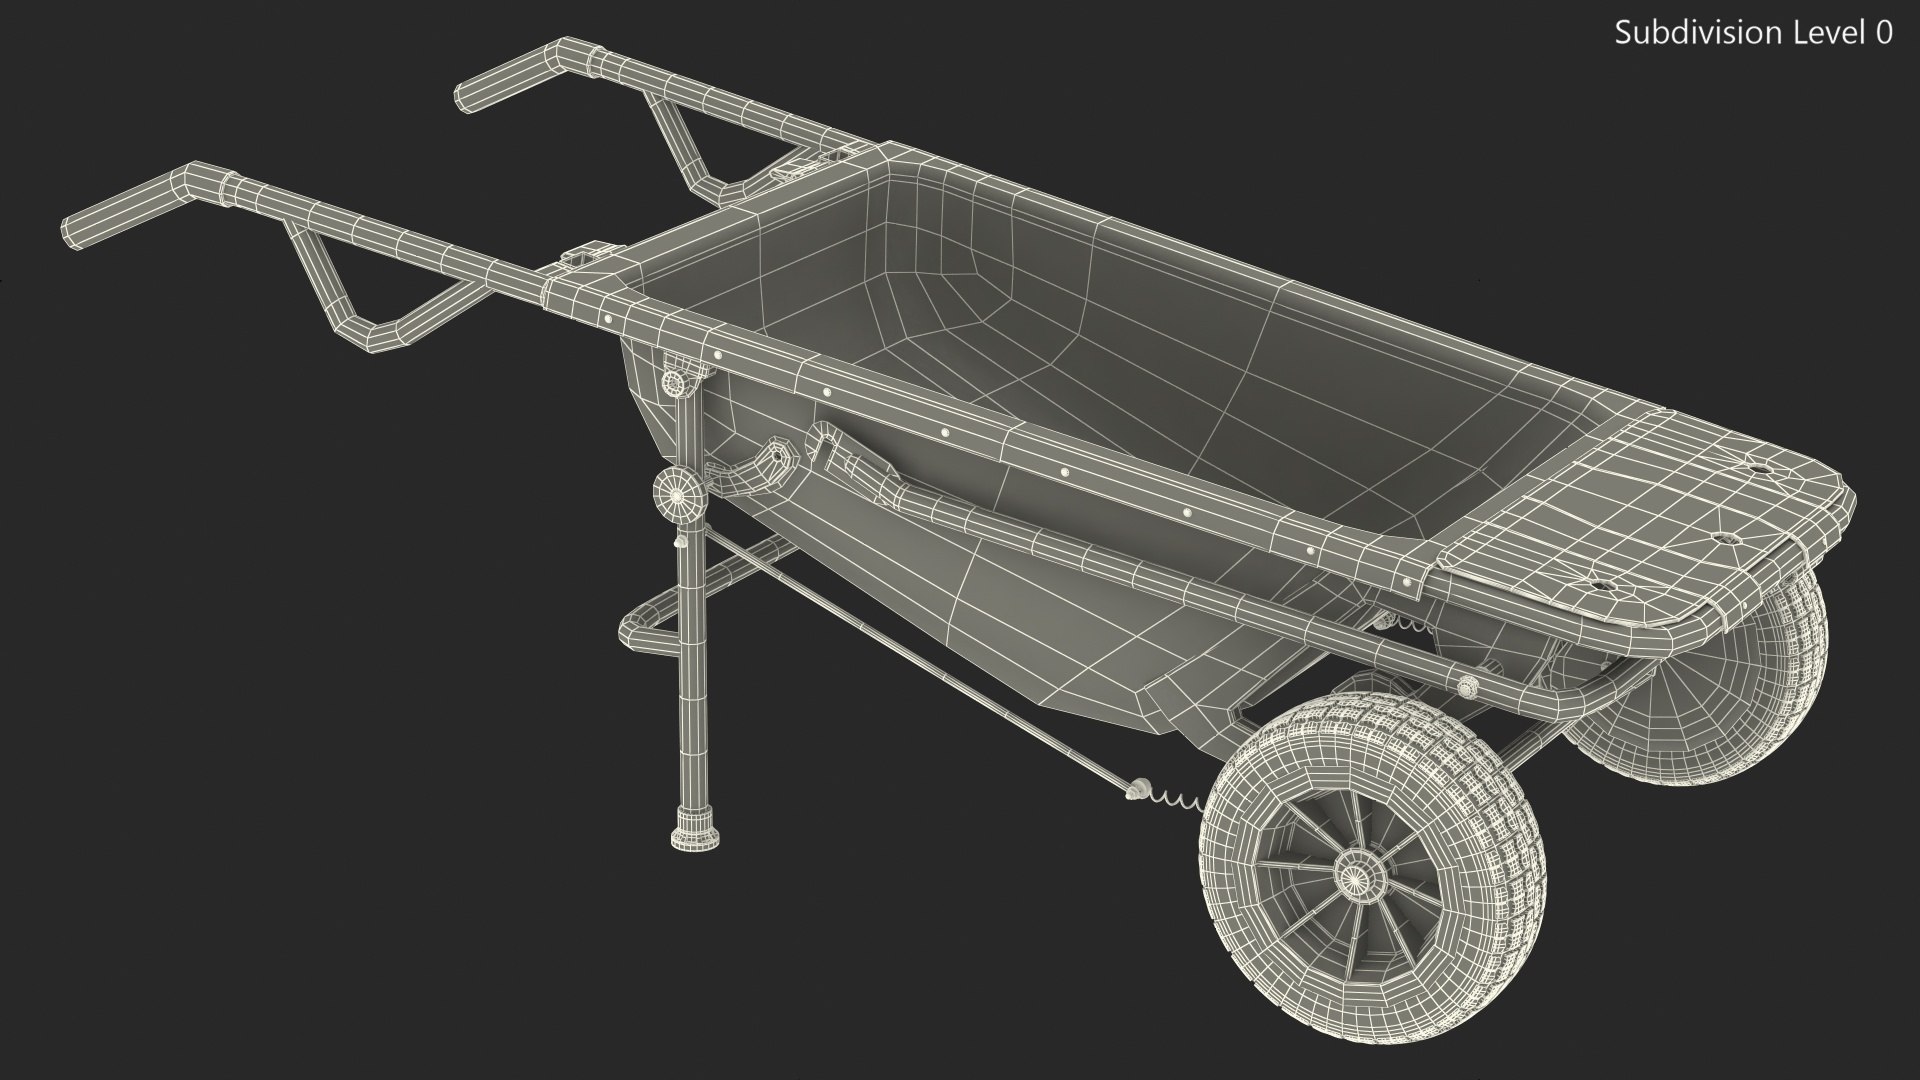 3D worx aerocart 8in1 wheelbarrow - TurboSquid 1571960